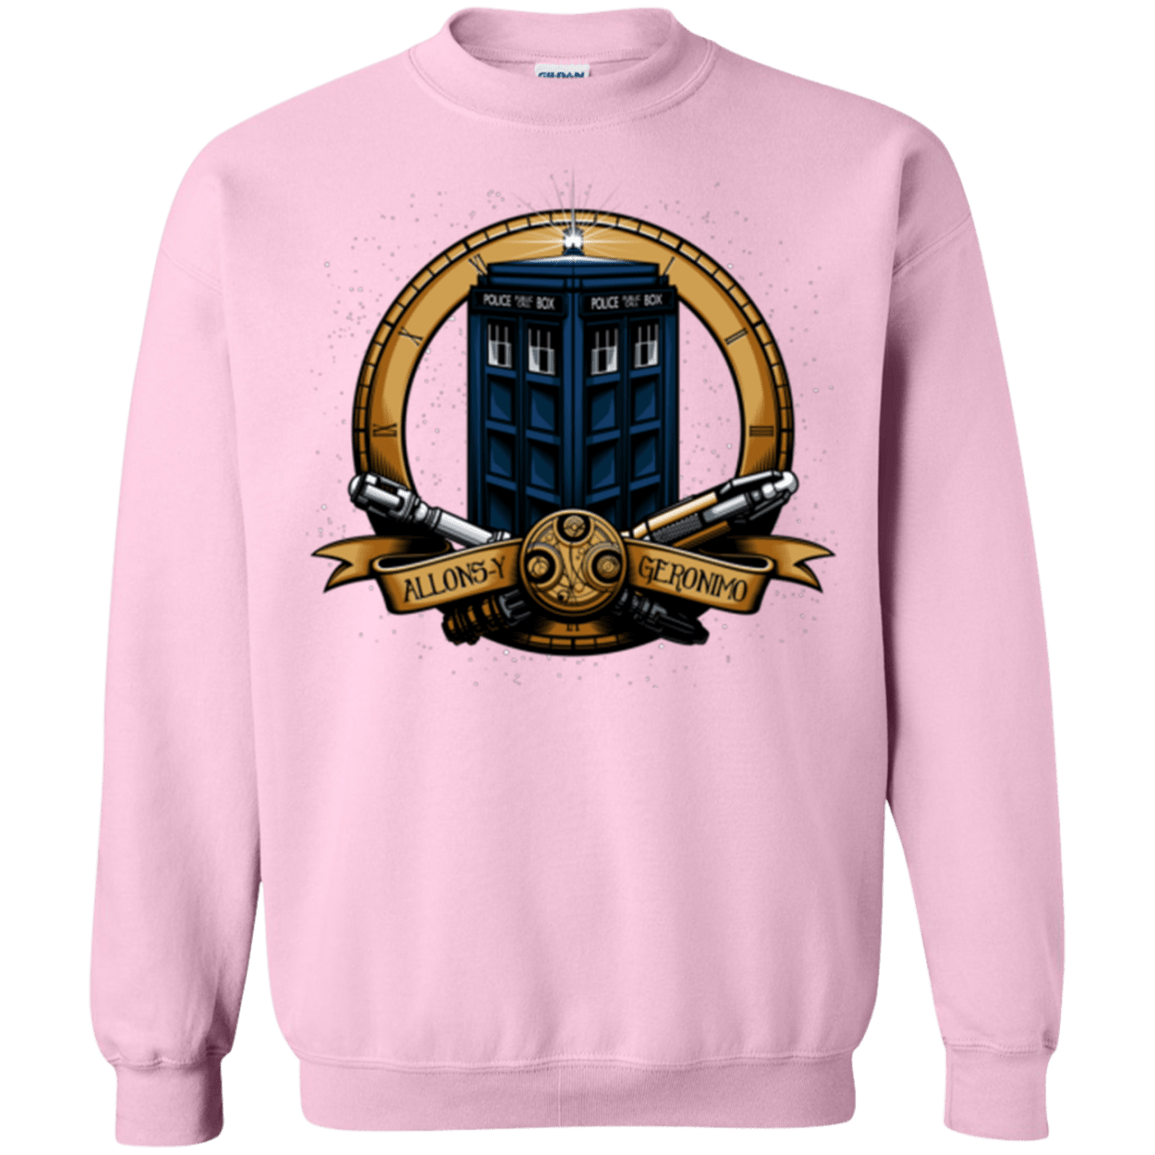 Sweatshirts Light Pink / Small The Day of the Doctor Crewneck Sweatshirt